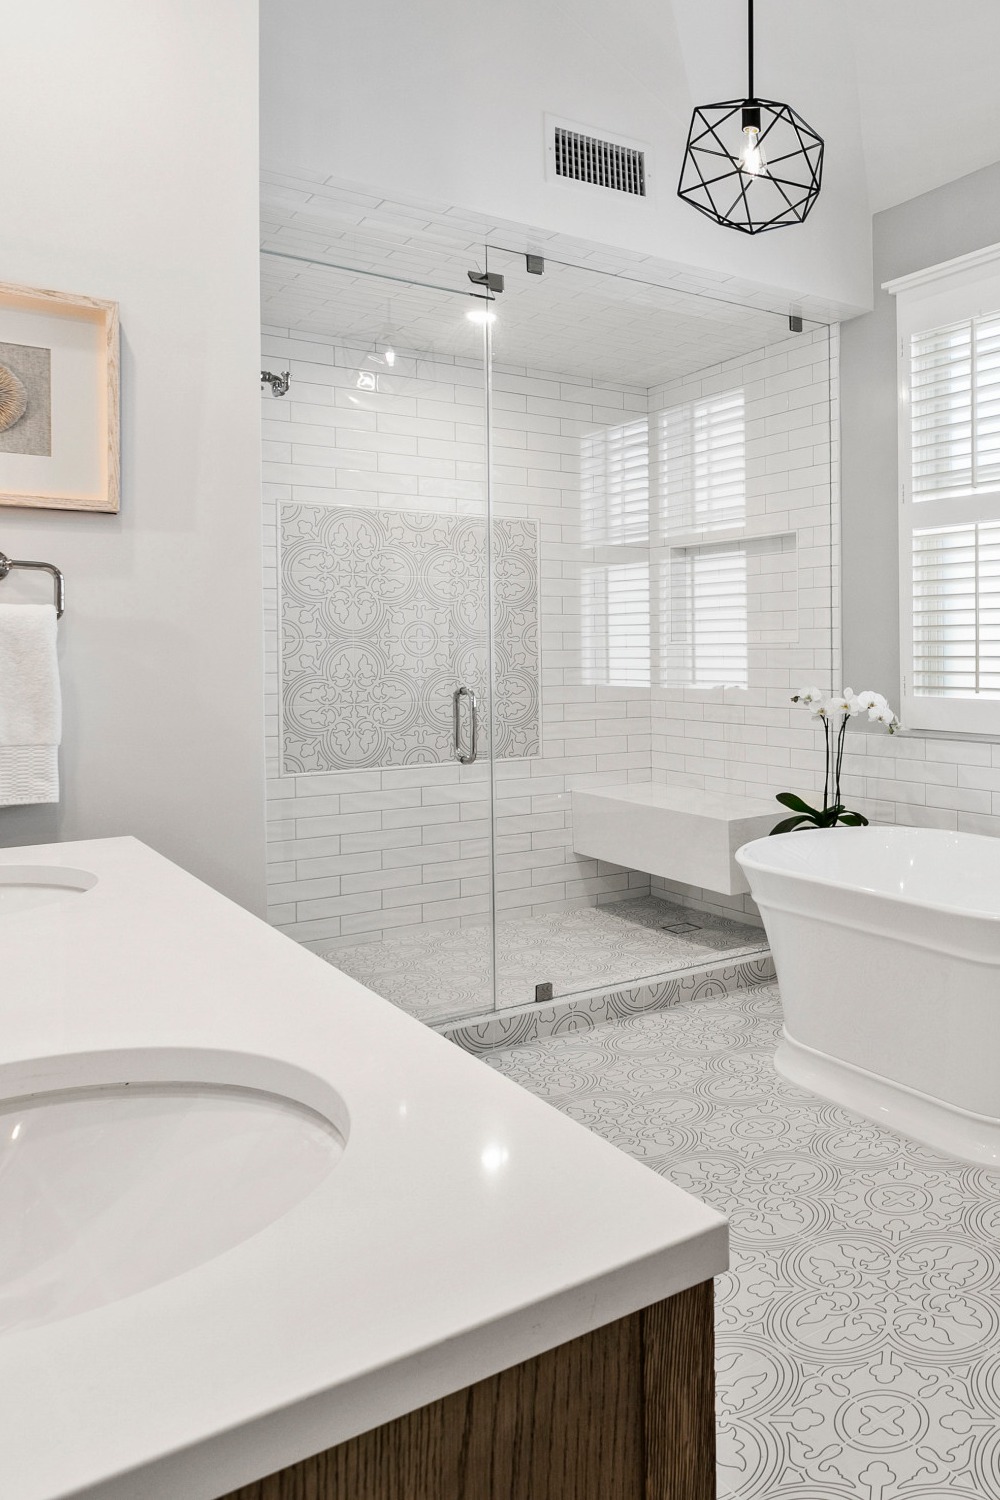 Furniture Like Bathroom Cabinets Multicolored Porcelain Tile White Subway Quartz Counter Freestanding Bathtub Shower Door